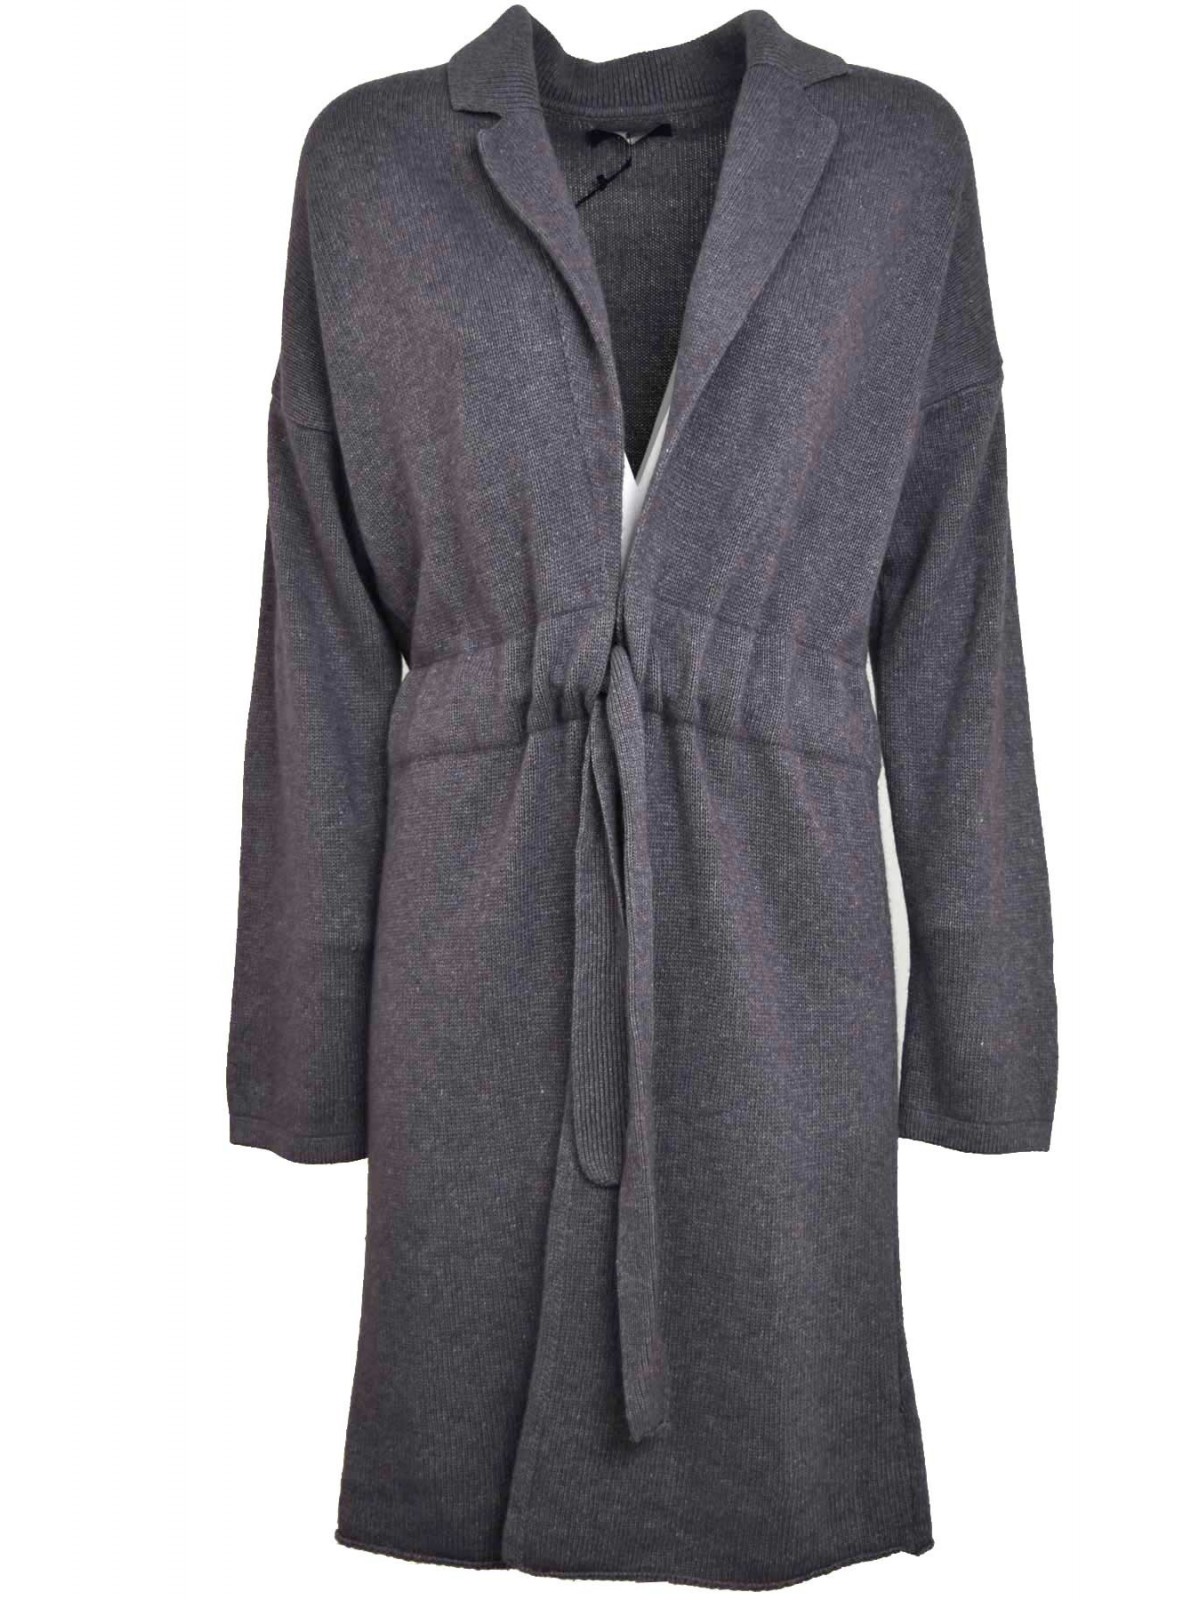 Coat Sweater Woman Cardigan Long V Neckline Gray Medium